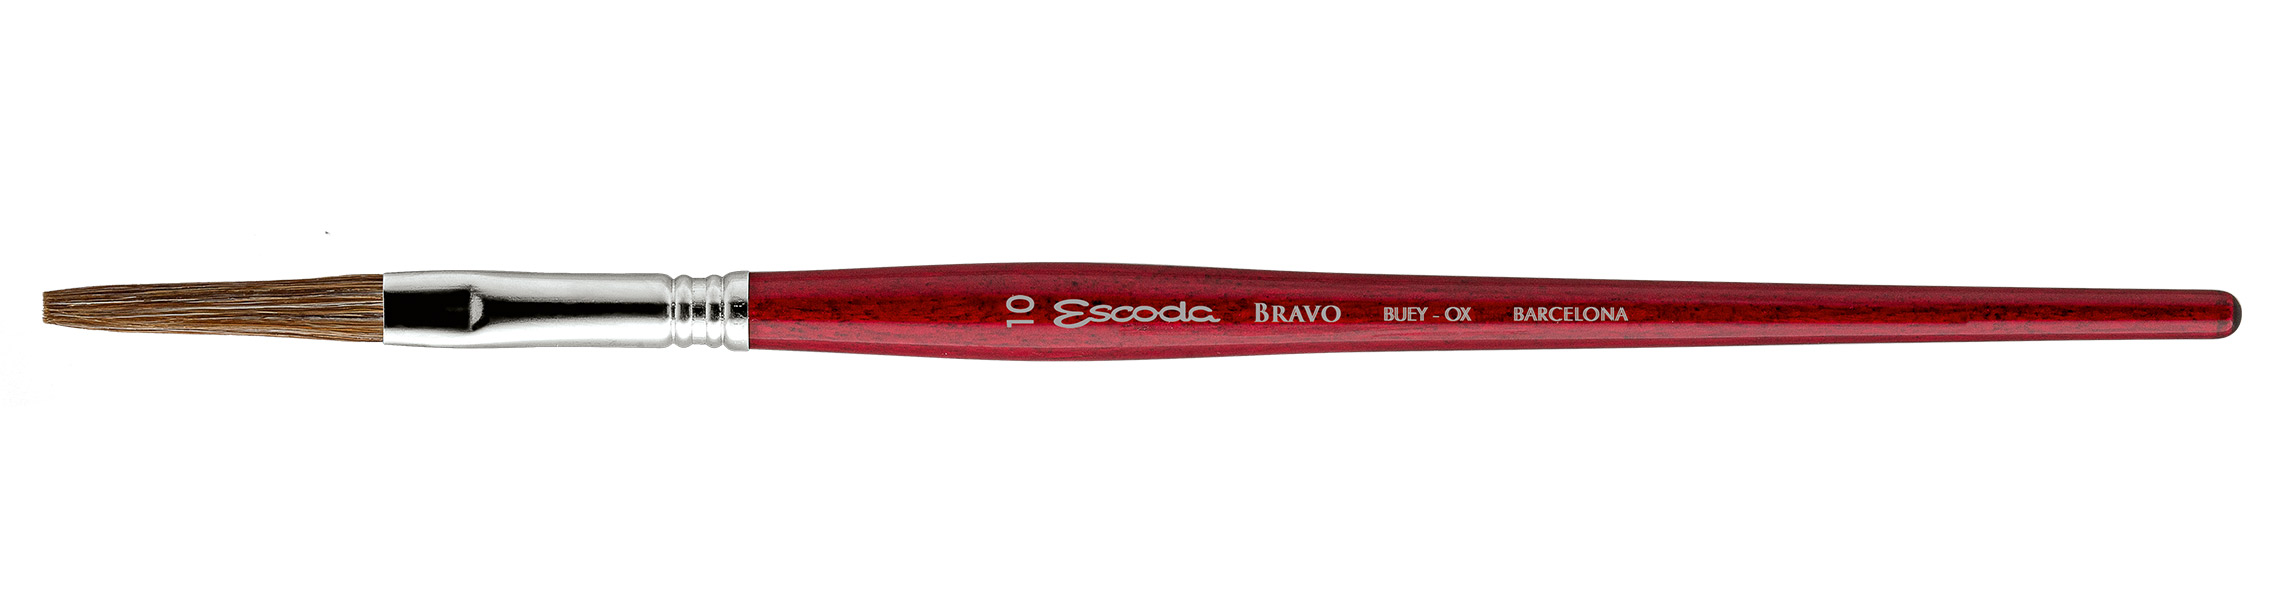 Escoda brushes serie 6318